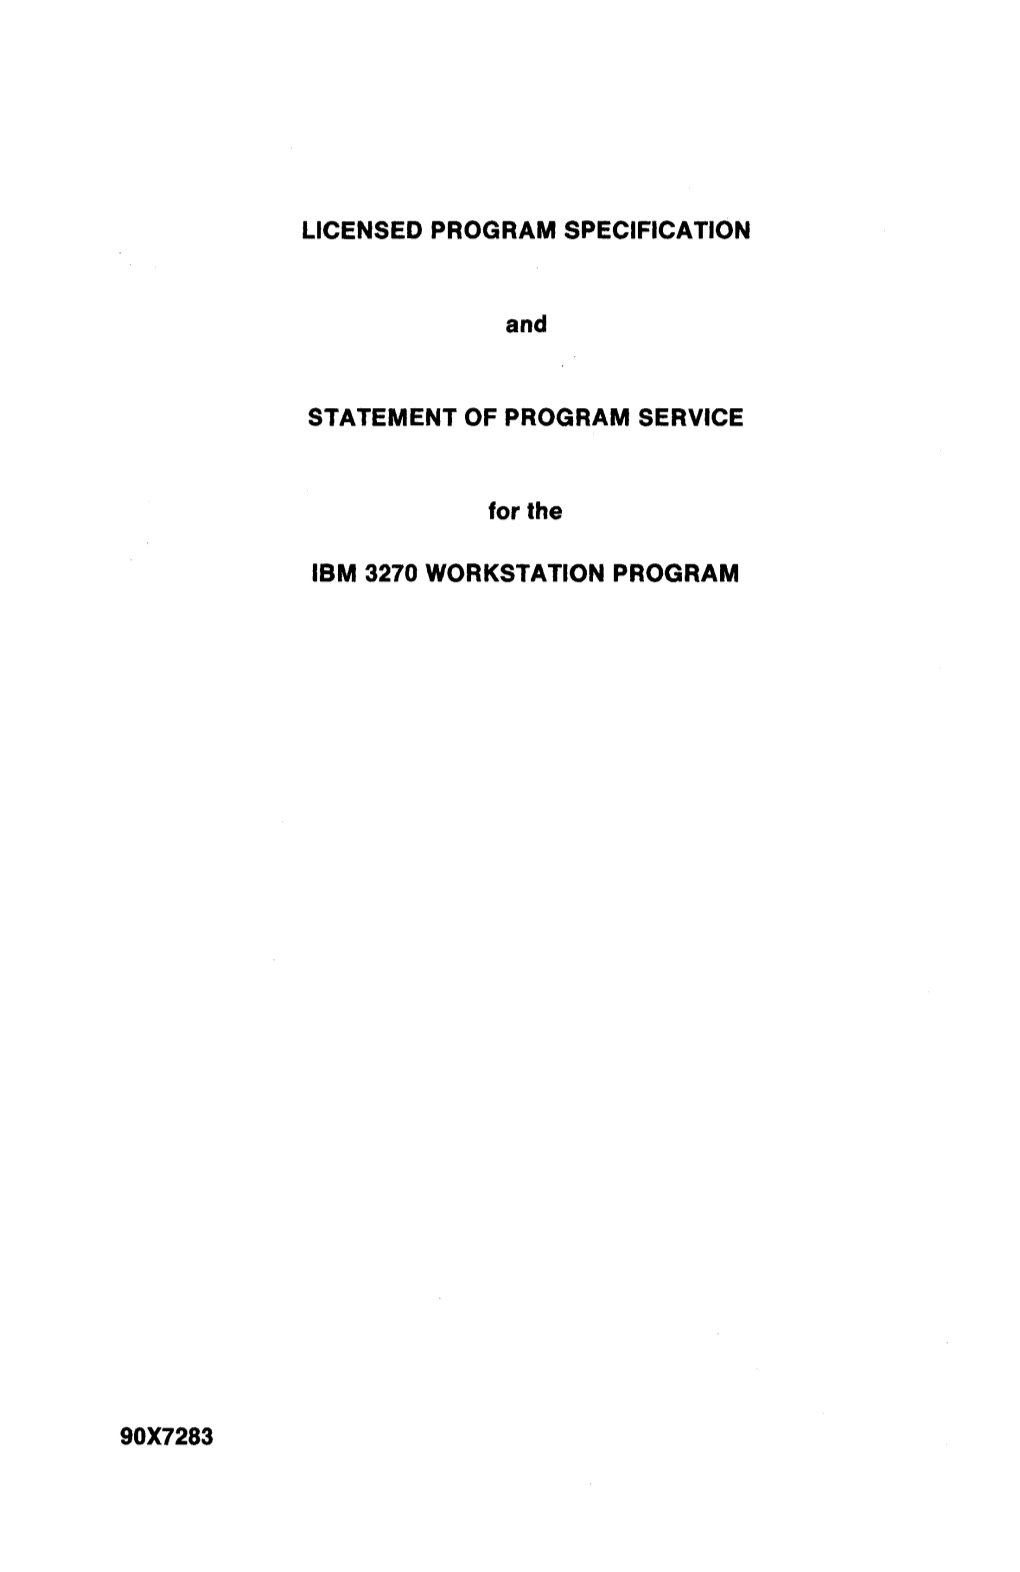 LICENSED PROGRAM SPECIFICATION and STATEMENT of PROGRAM SERVICE for the IBM 3270 WORKSTATION PROGRAM 90X7283